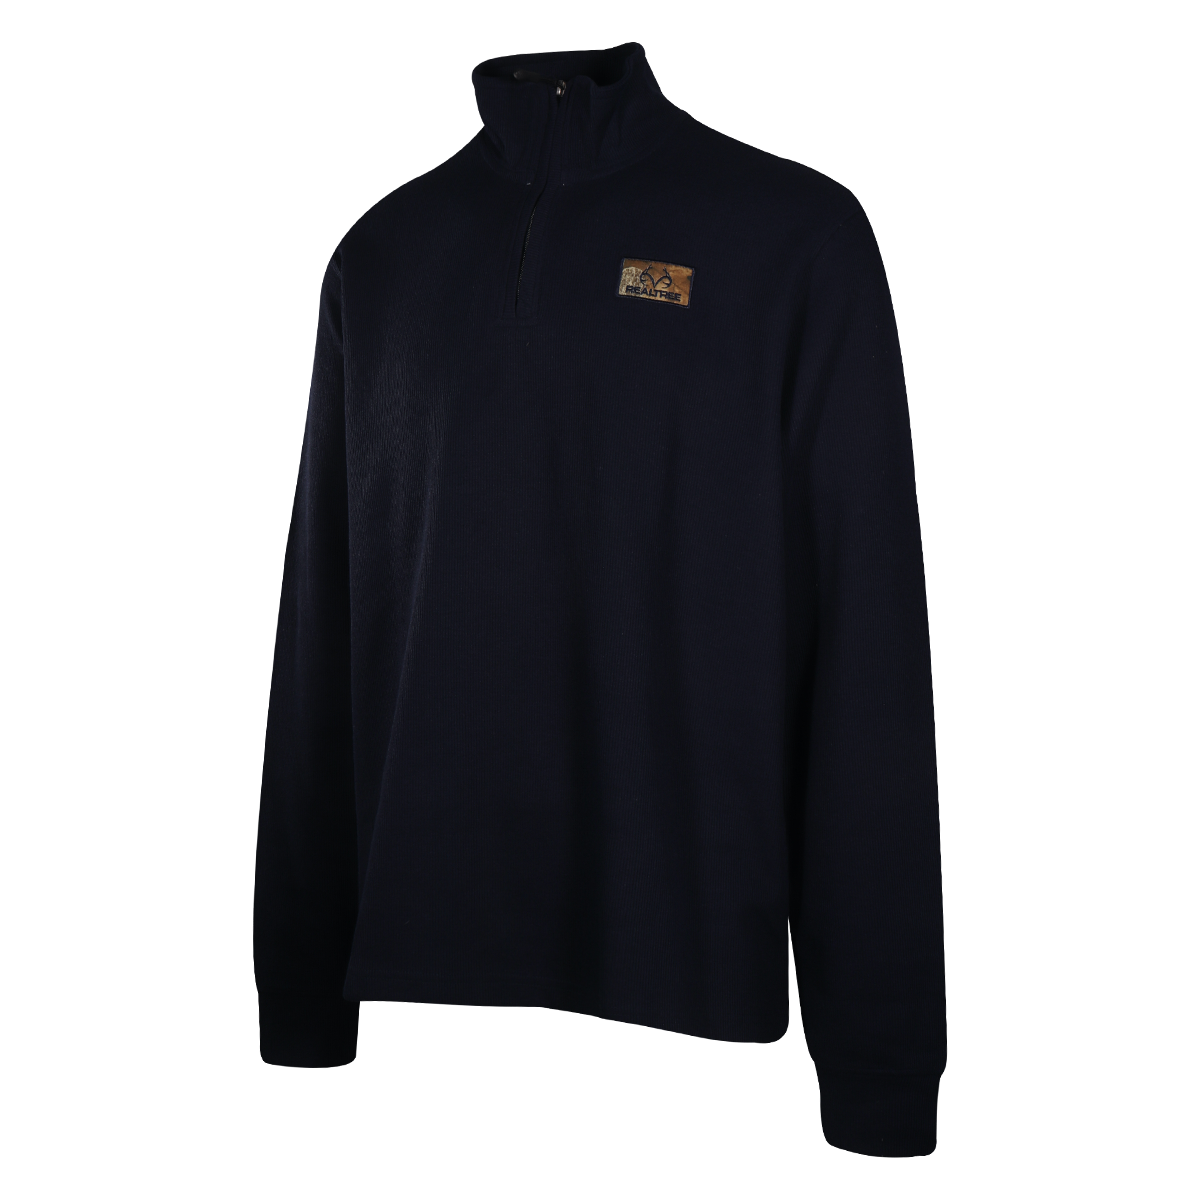 Realtree Men's Sweater Navy Blue Mock Neck Long Sleeve (S02) Size 2XL